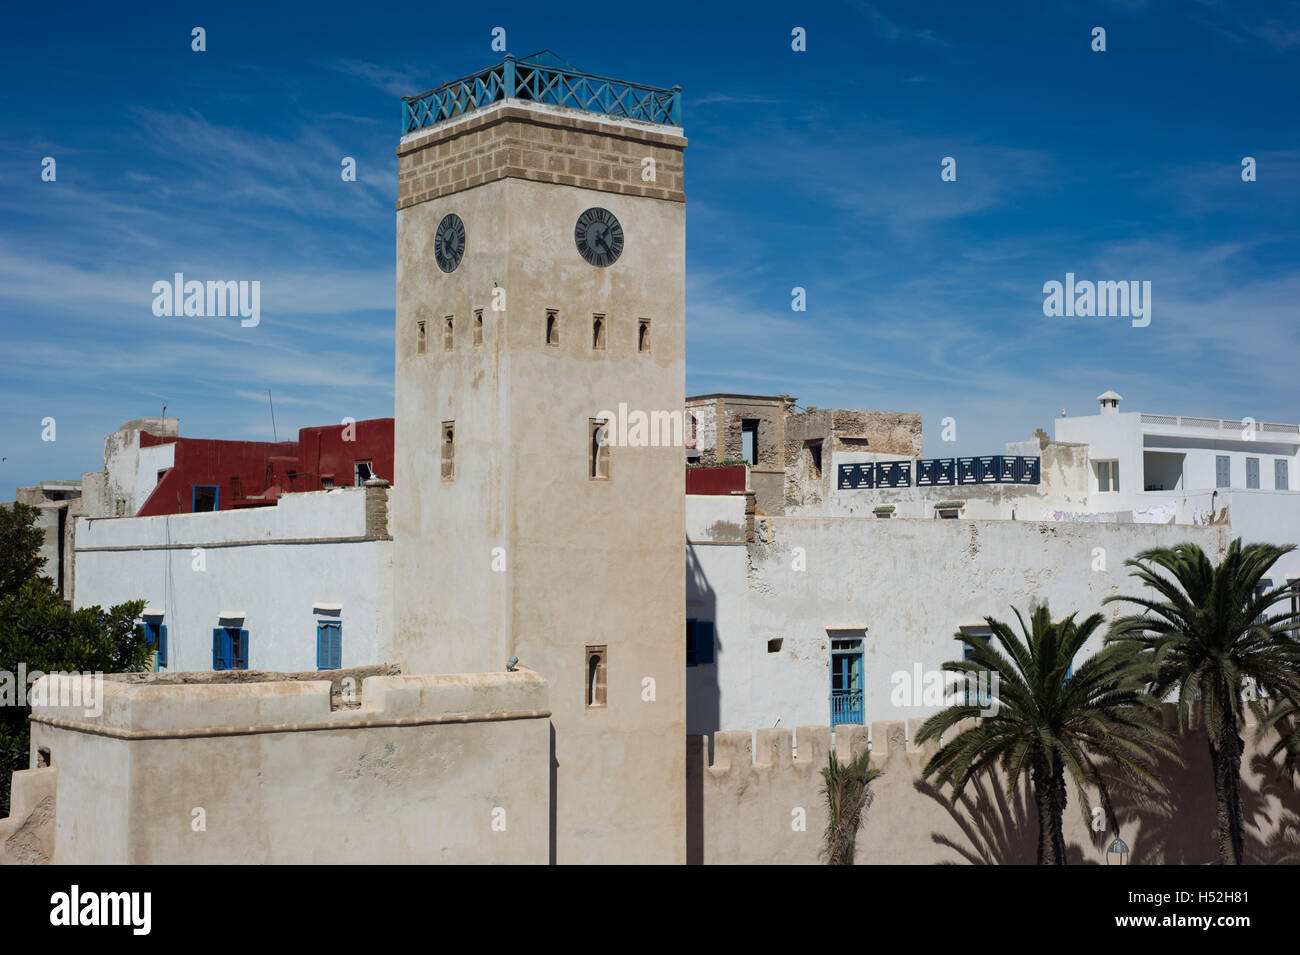 View of clock tower in Essaouira. Stock Photo